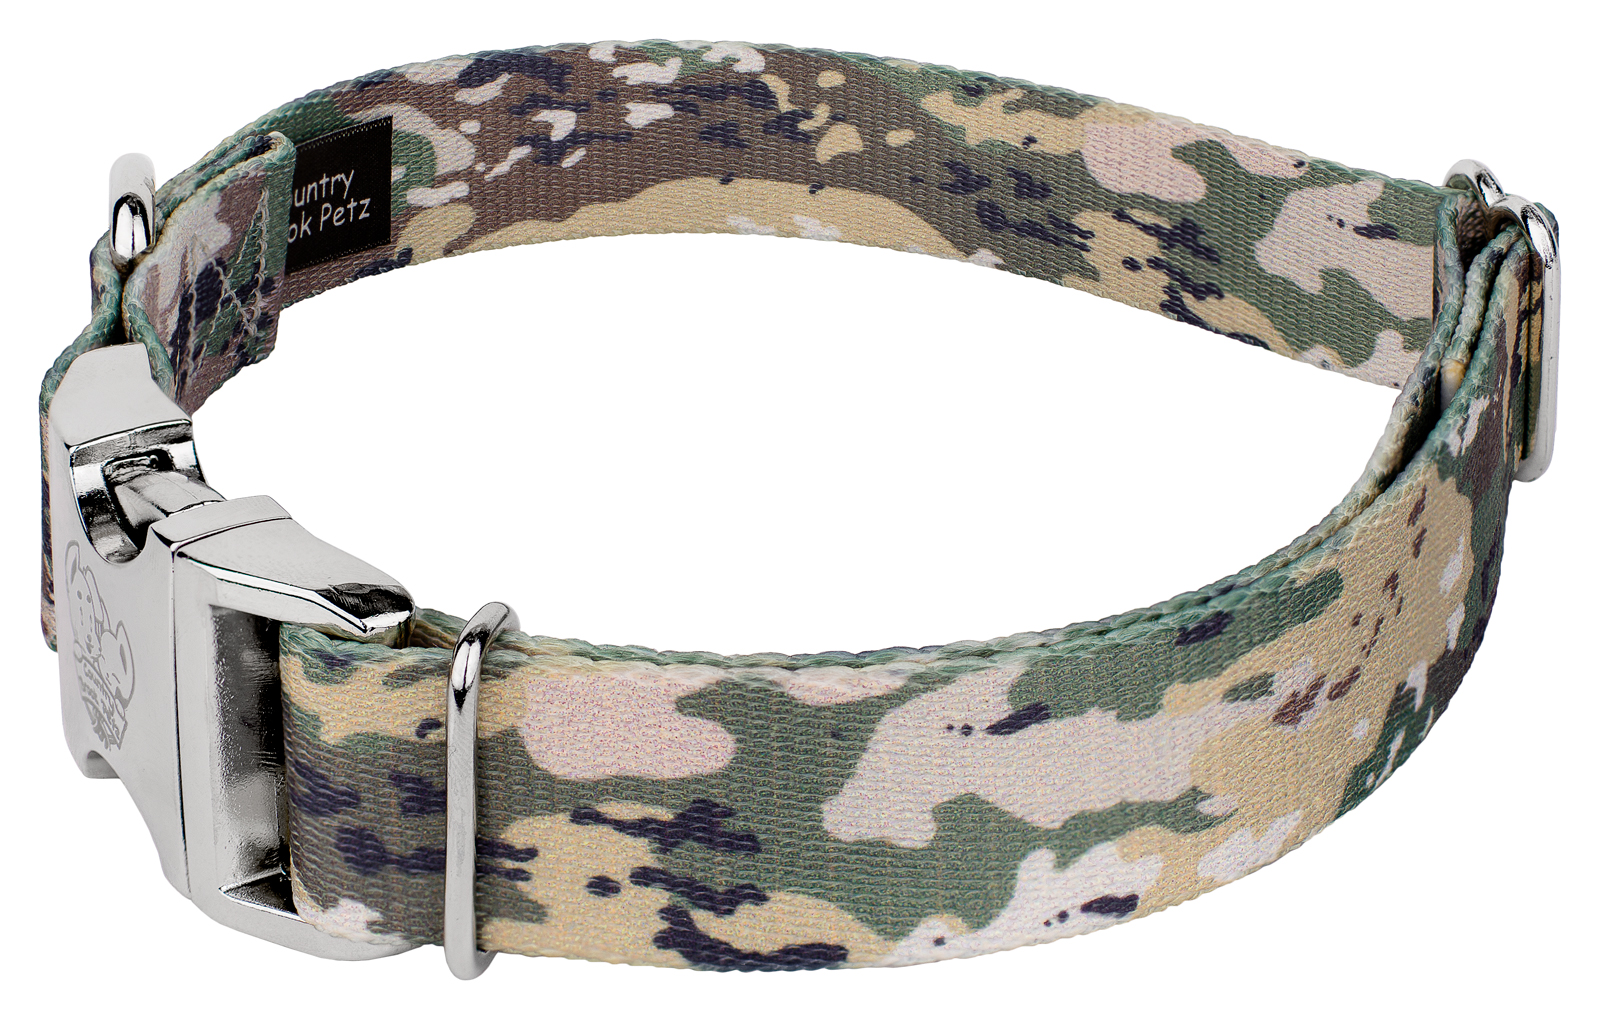 Country Brook Petz® Premium Mountain Viper Camo Dog Collar, Extra Large - image 5 of 7